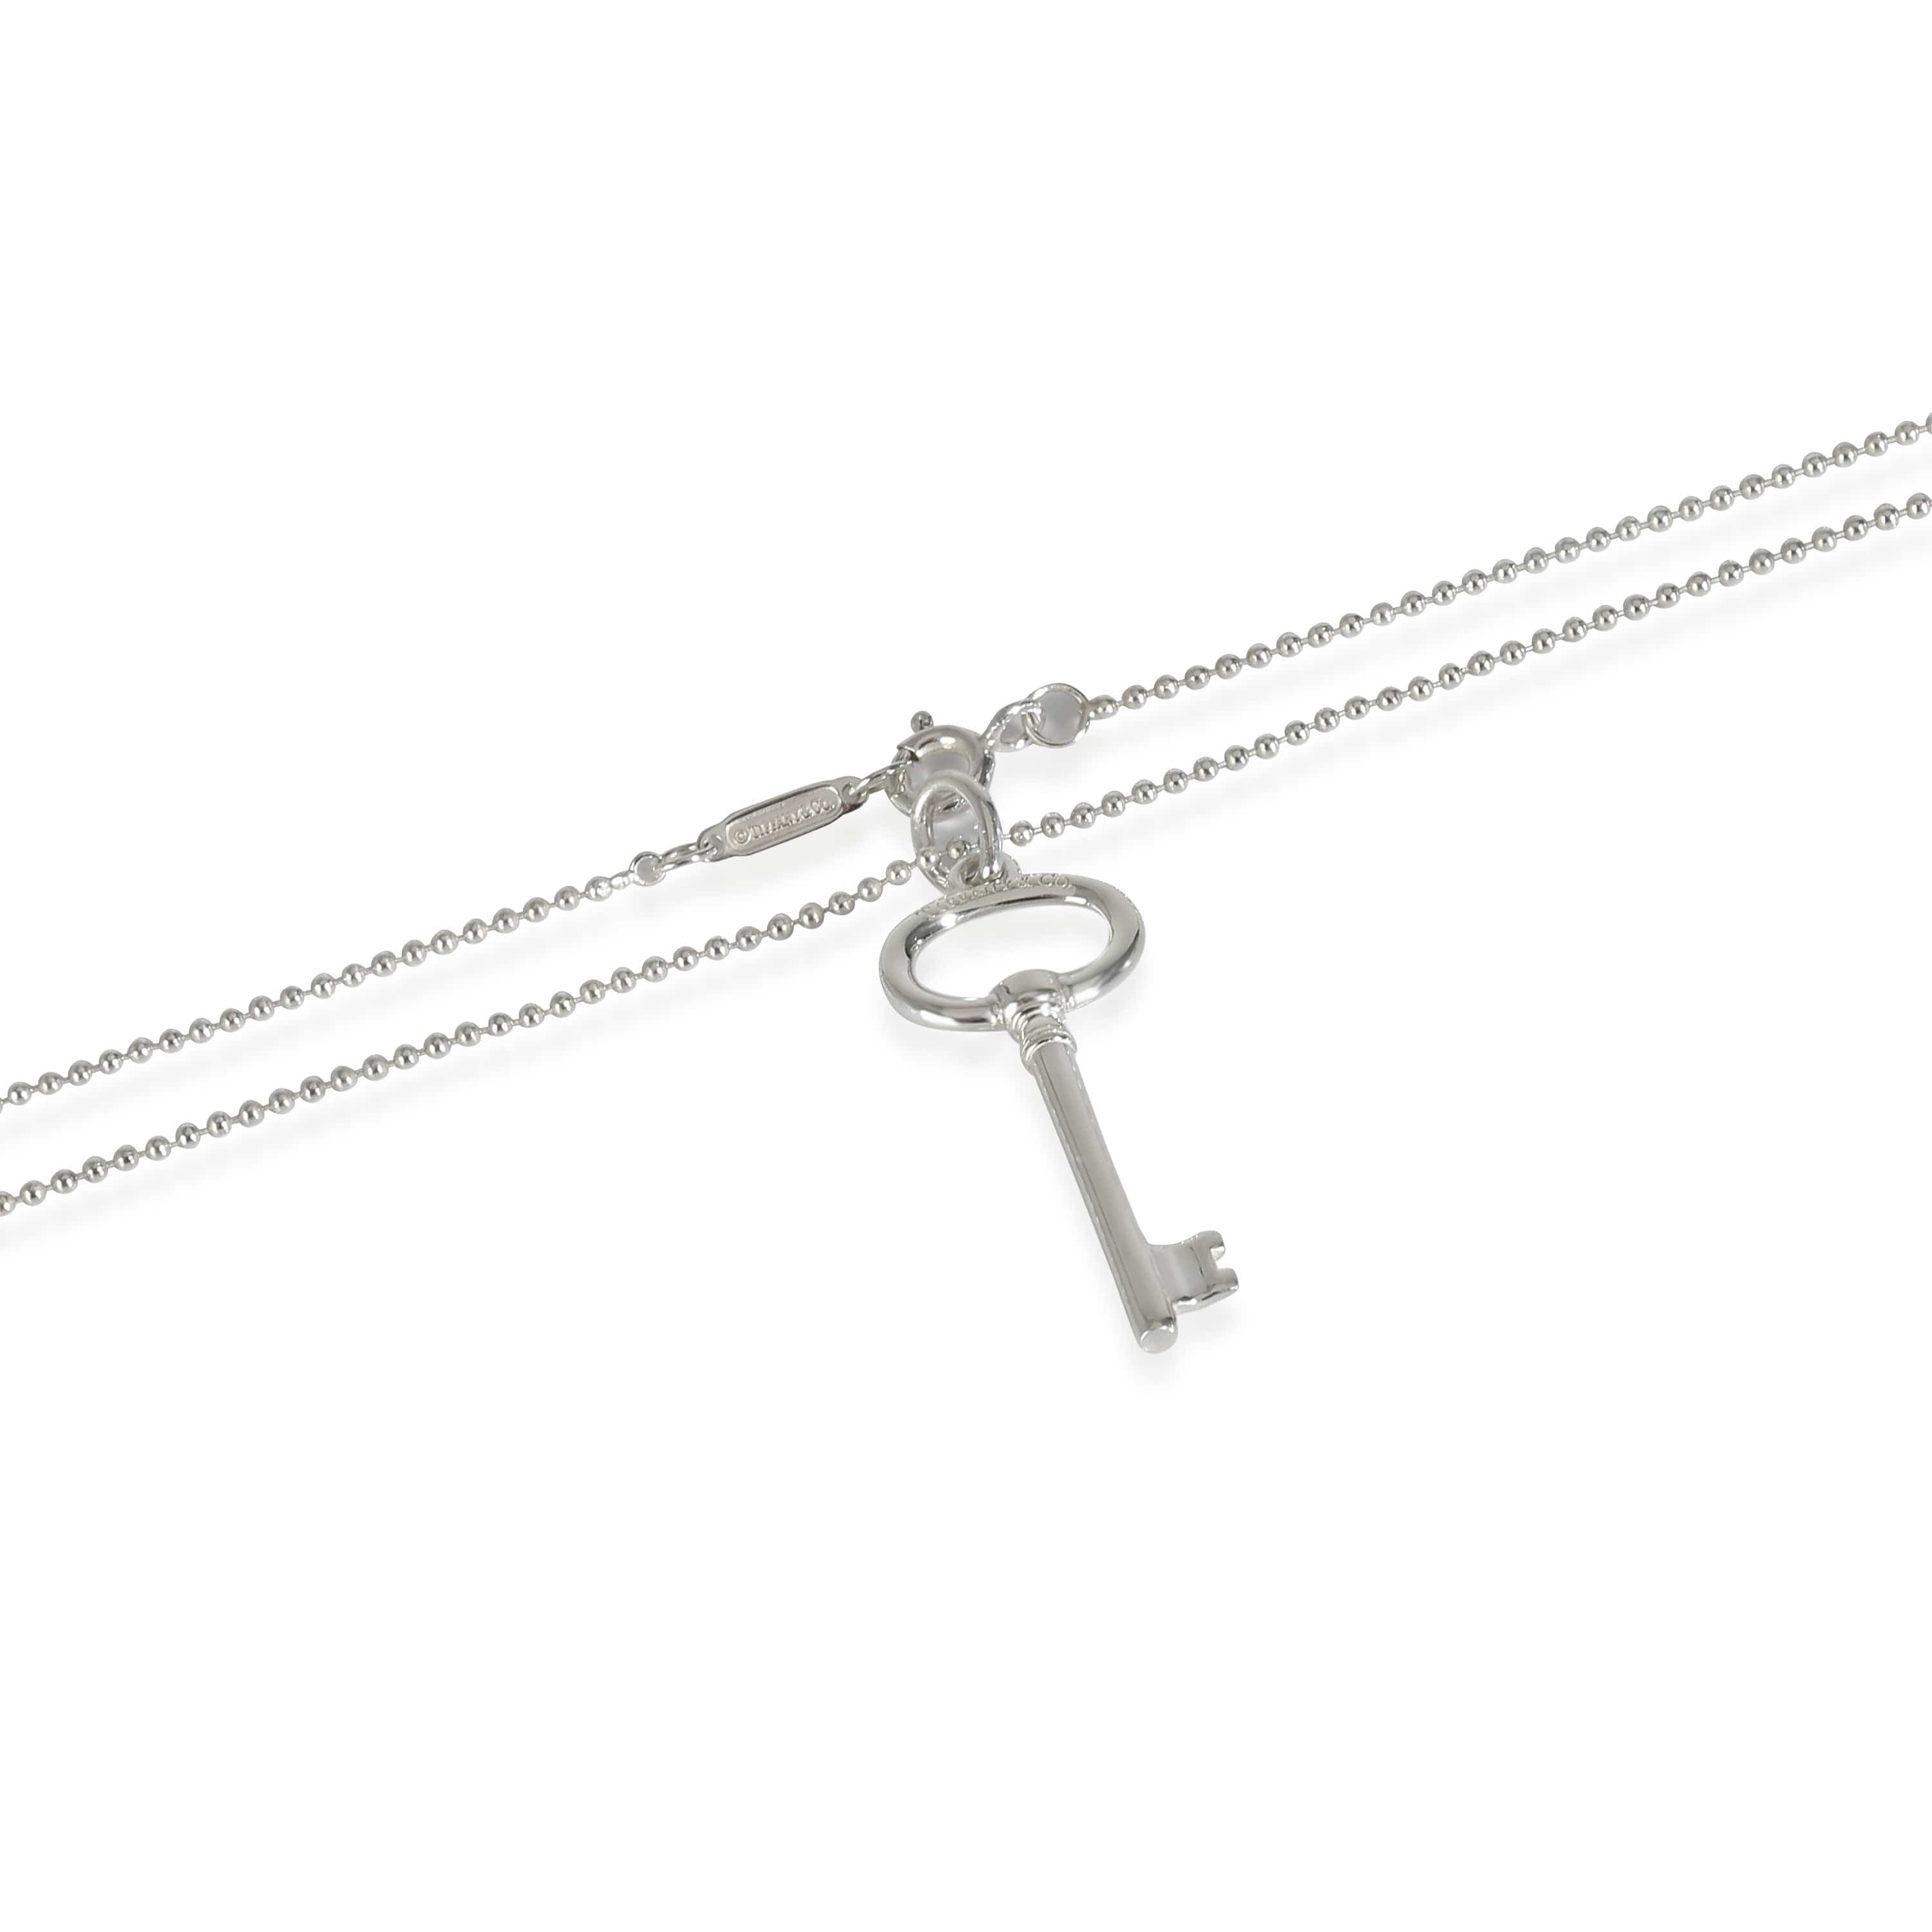 Tiffany & Co. Tiffany & Co. Mini Oval Key Pendant on Bead Chain in Sterling Silver